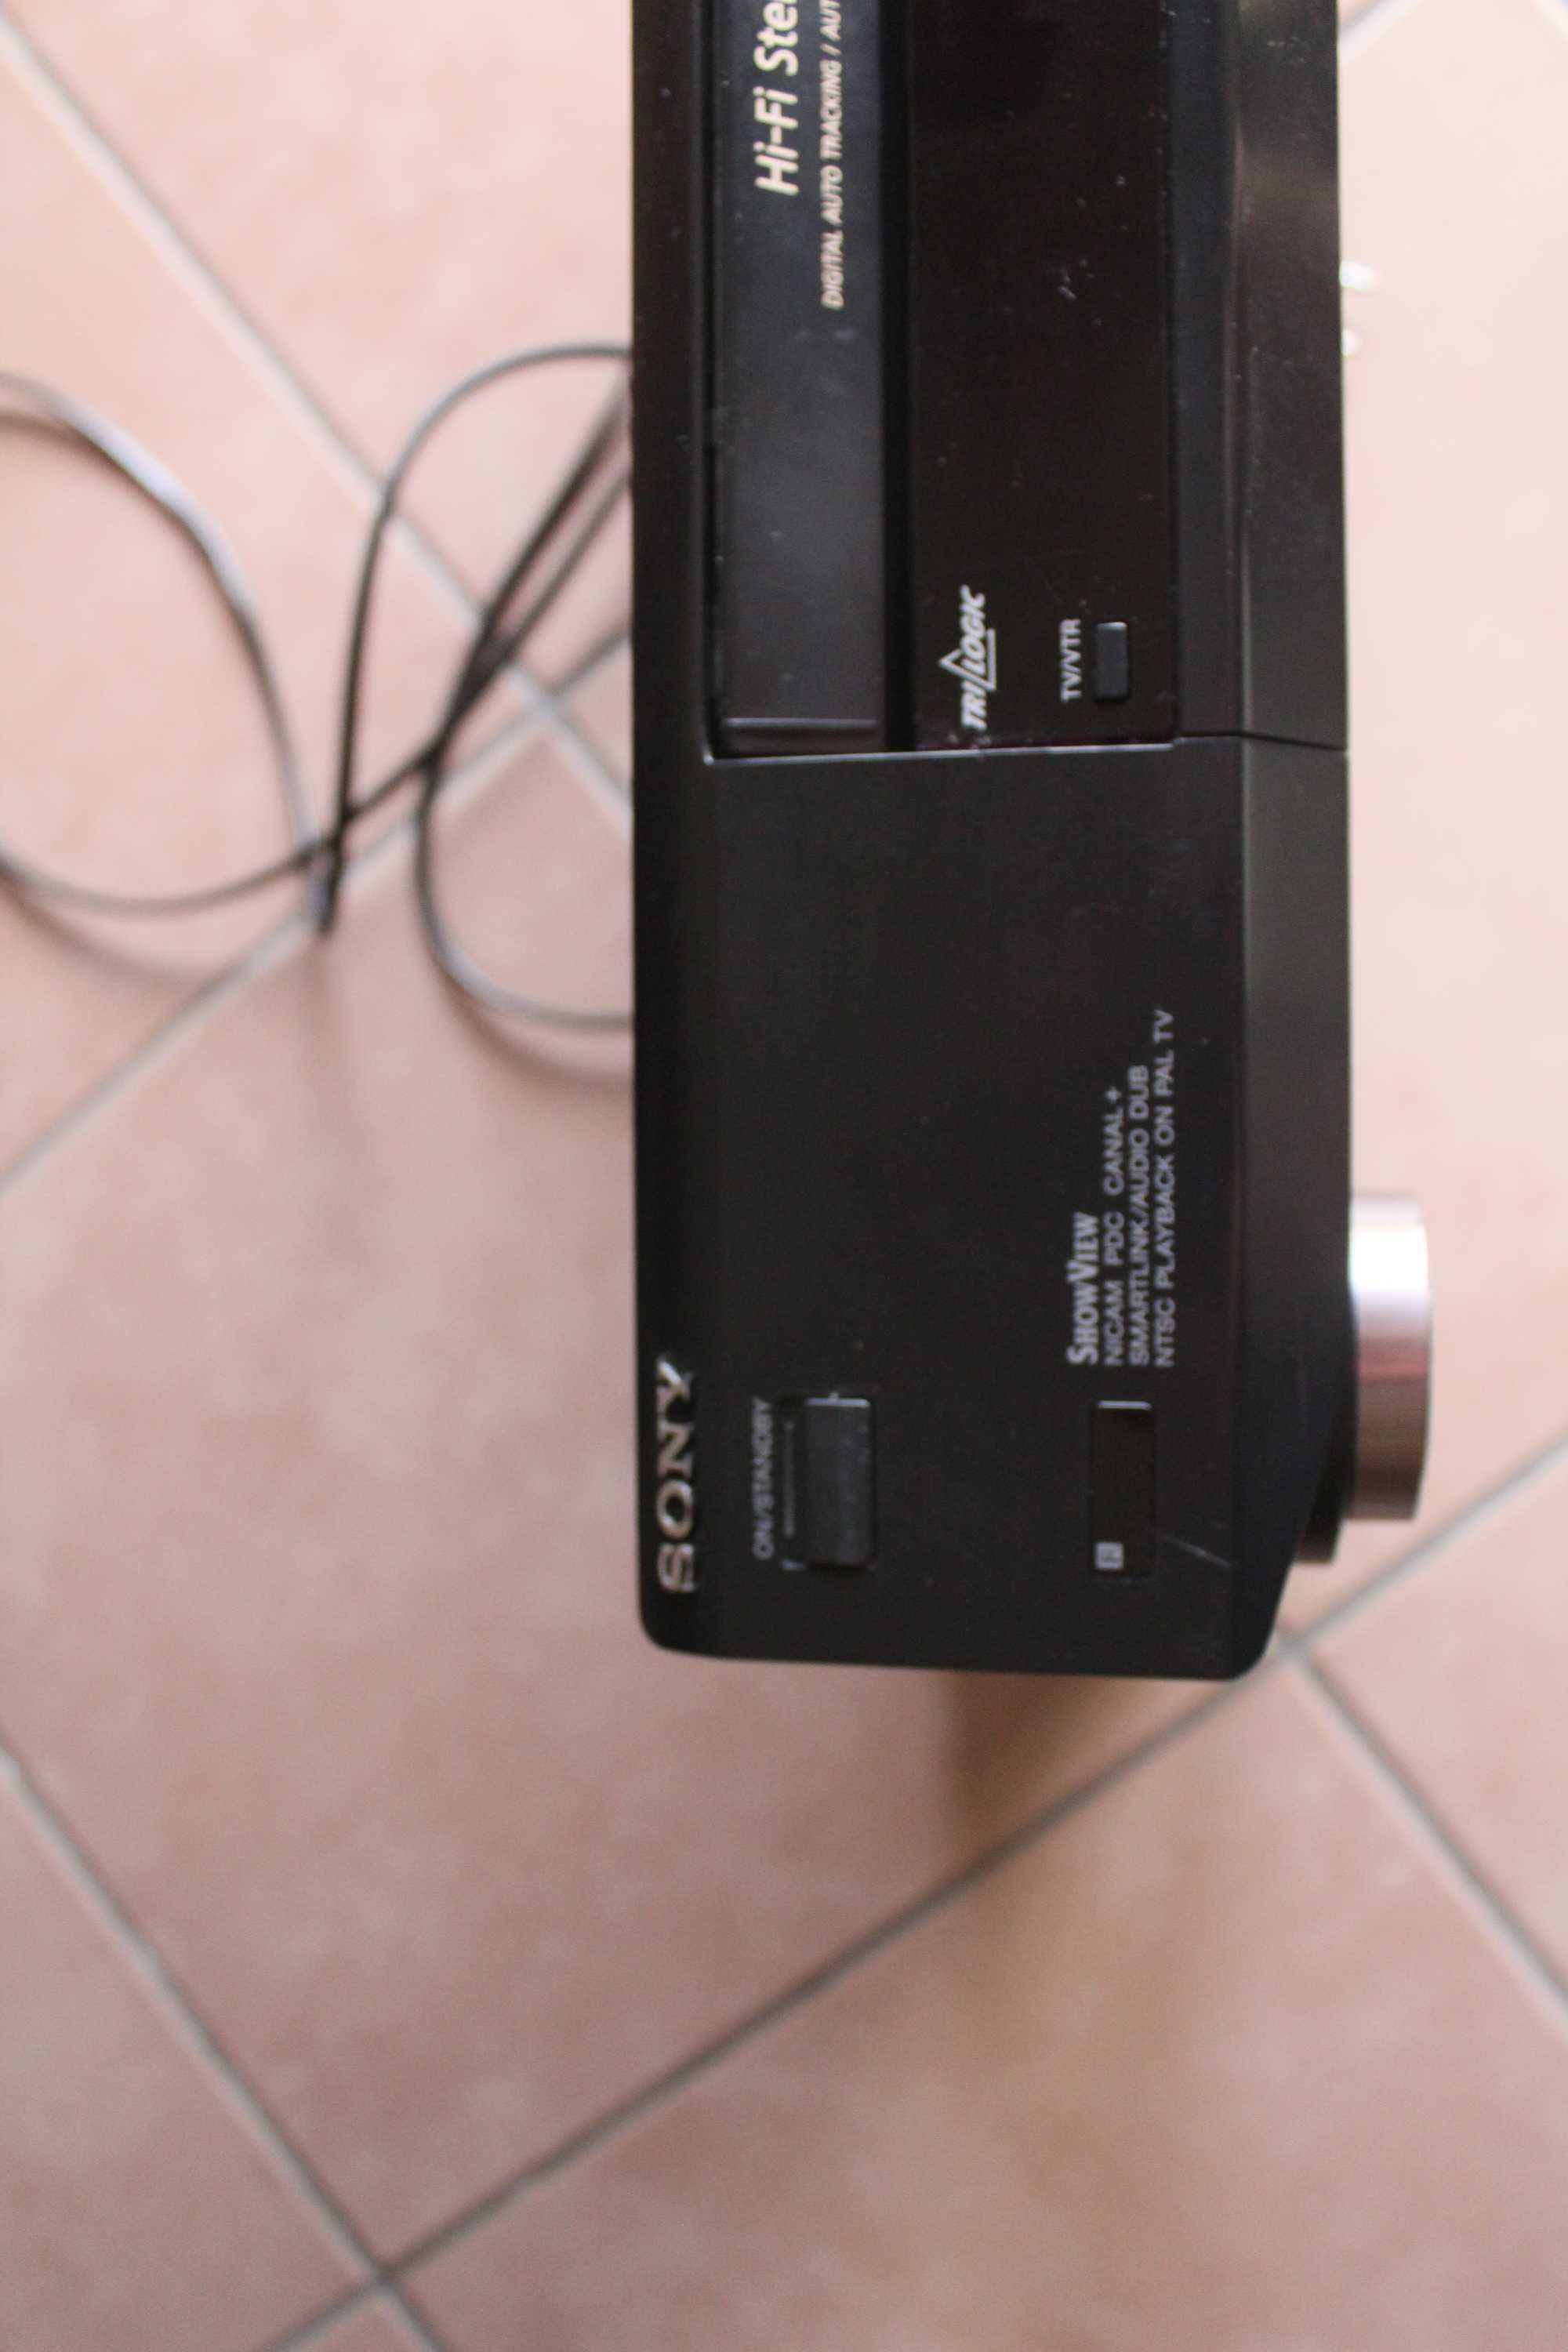 Videogravador VHS Sonny